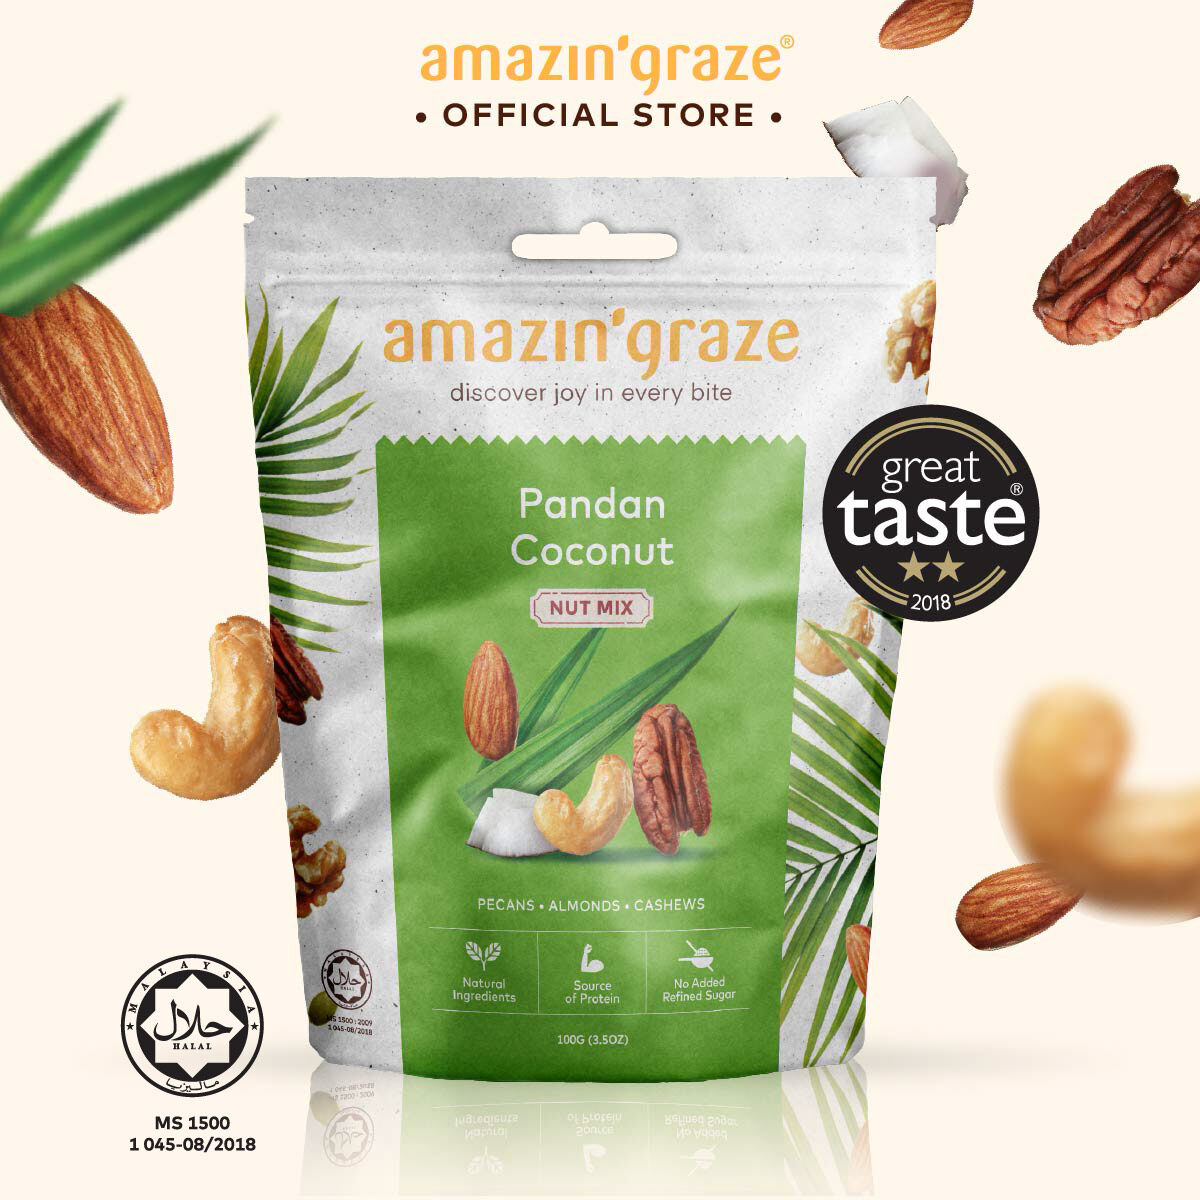 Amazin Graze Pandan Coconut Nut Mix 100g - Halal Certified